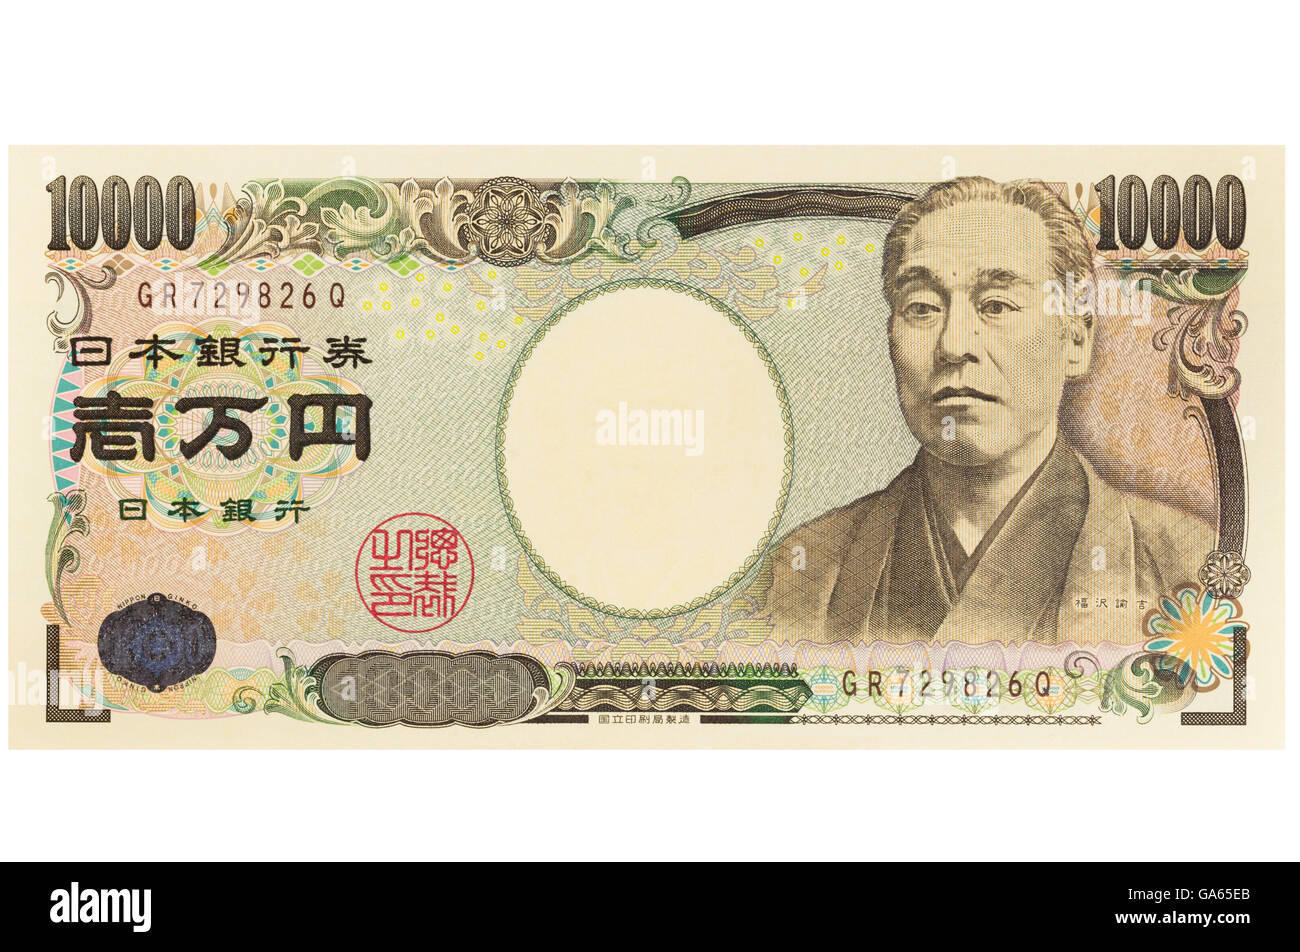 Giapponese dieci mila yen banconota su sfondo bianco Foto Stock